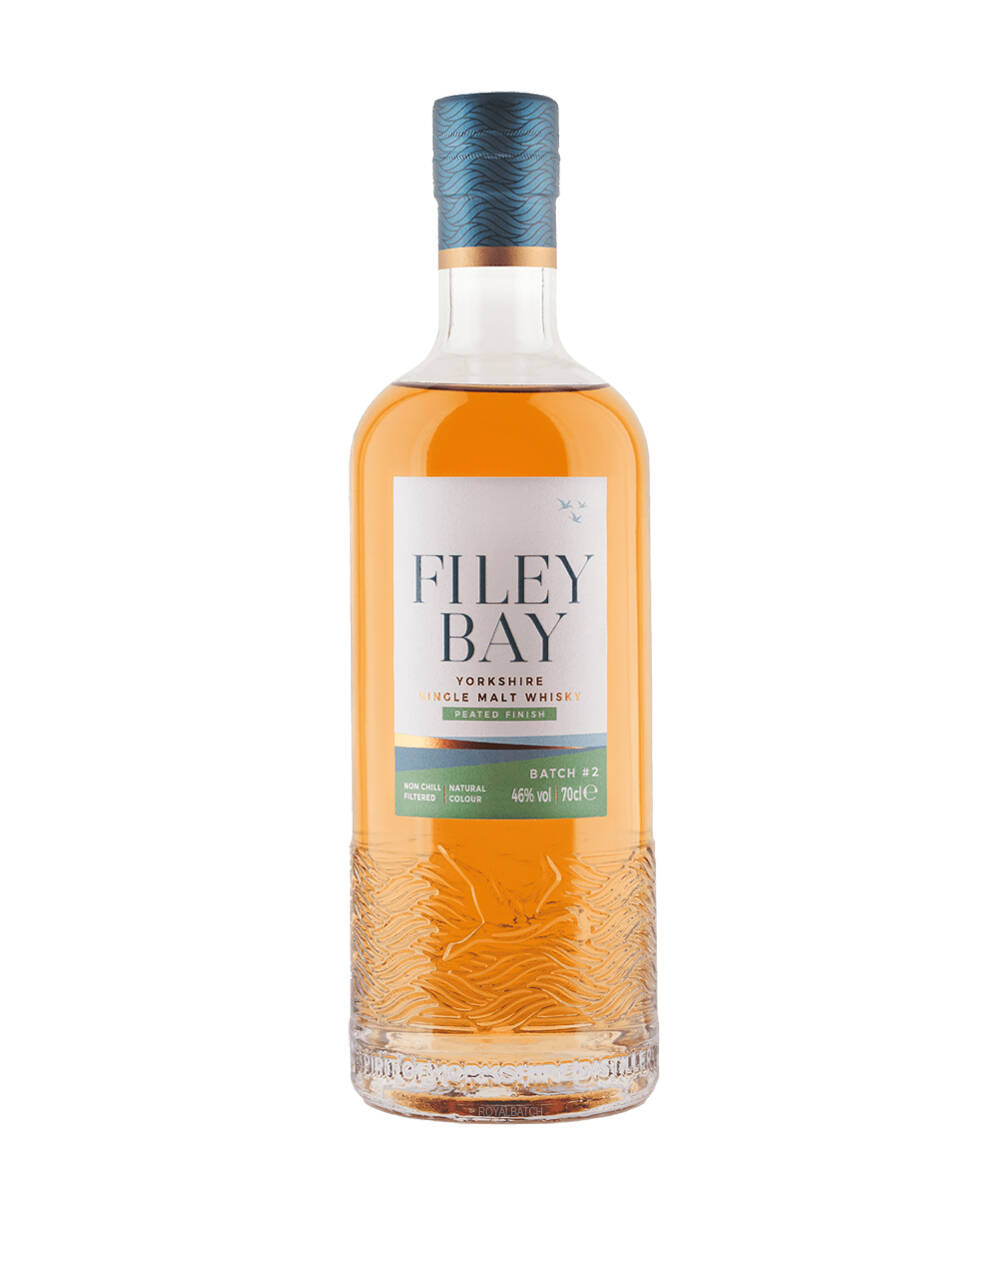 Filey Bay Yorkshire Peated Finish (Batch 2) Single Malt Whisky